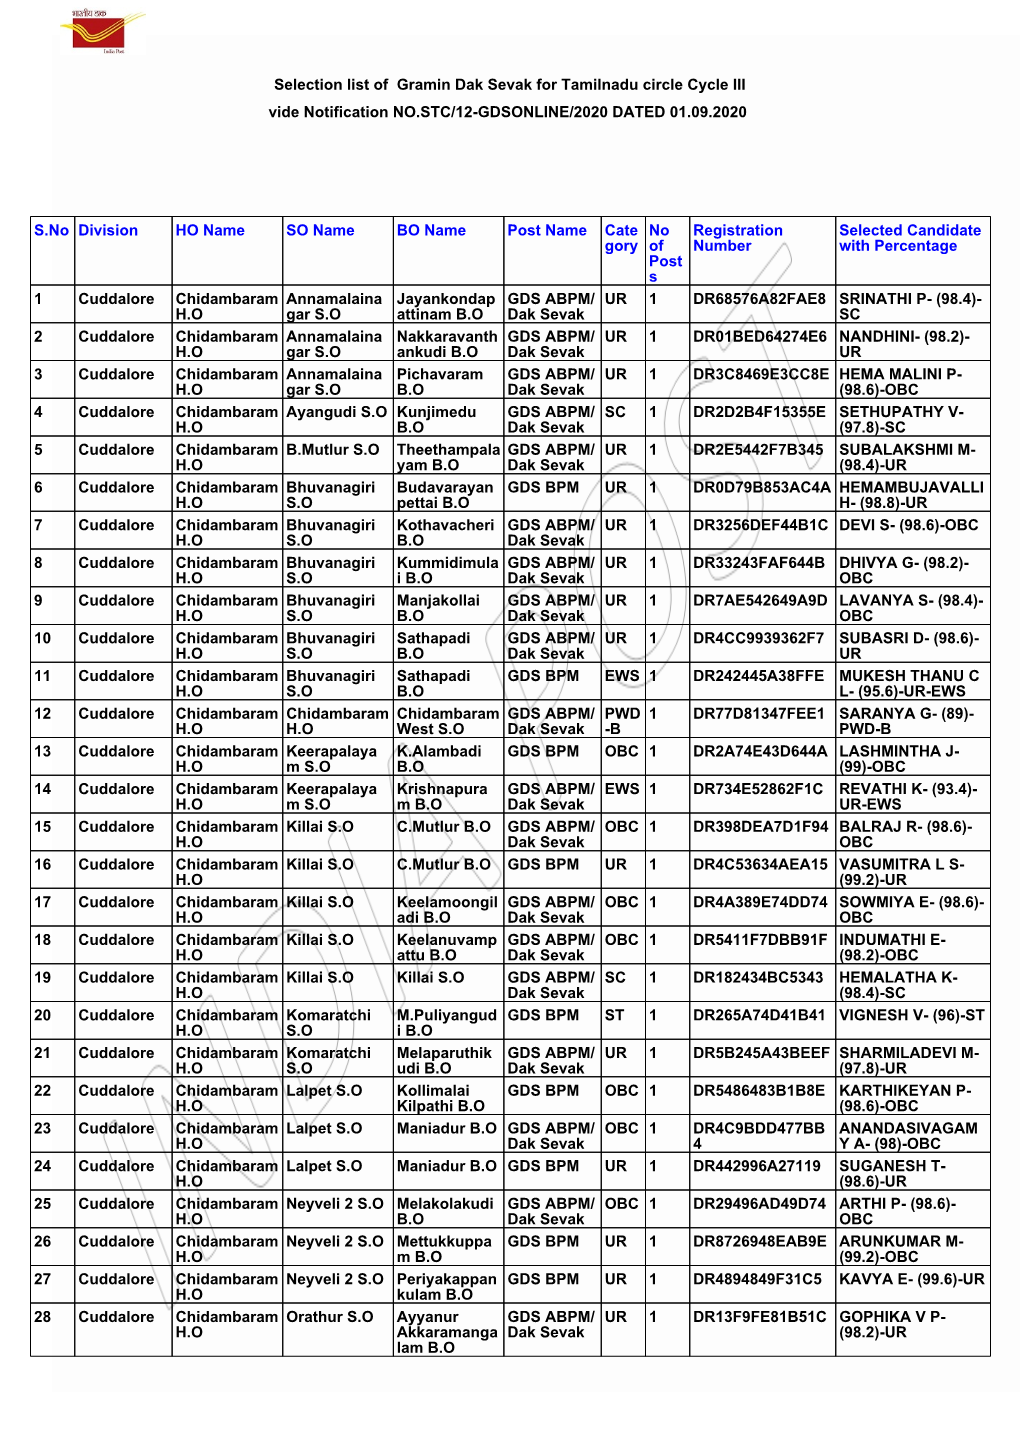 Selection List of Gramin Dak Sevak for Tamilnadu Circle Cycle III Vide Notification NO.STC/12-GDSONLINE/2020 DATED 01.09.2020